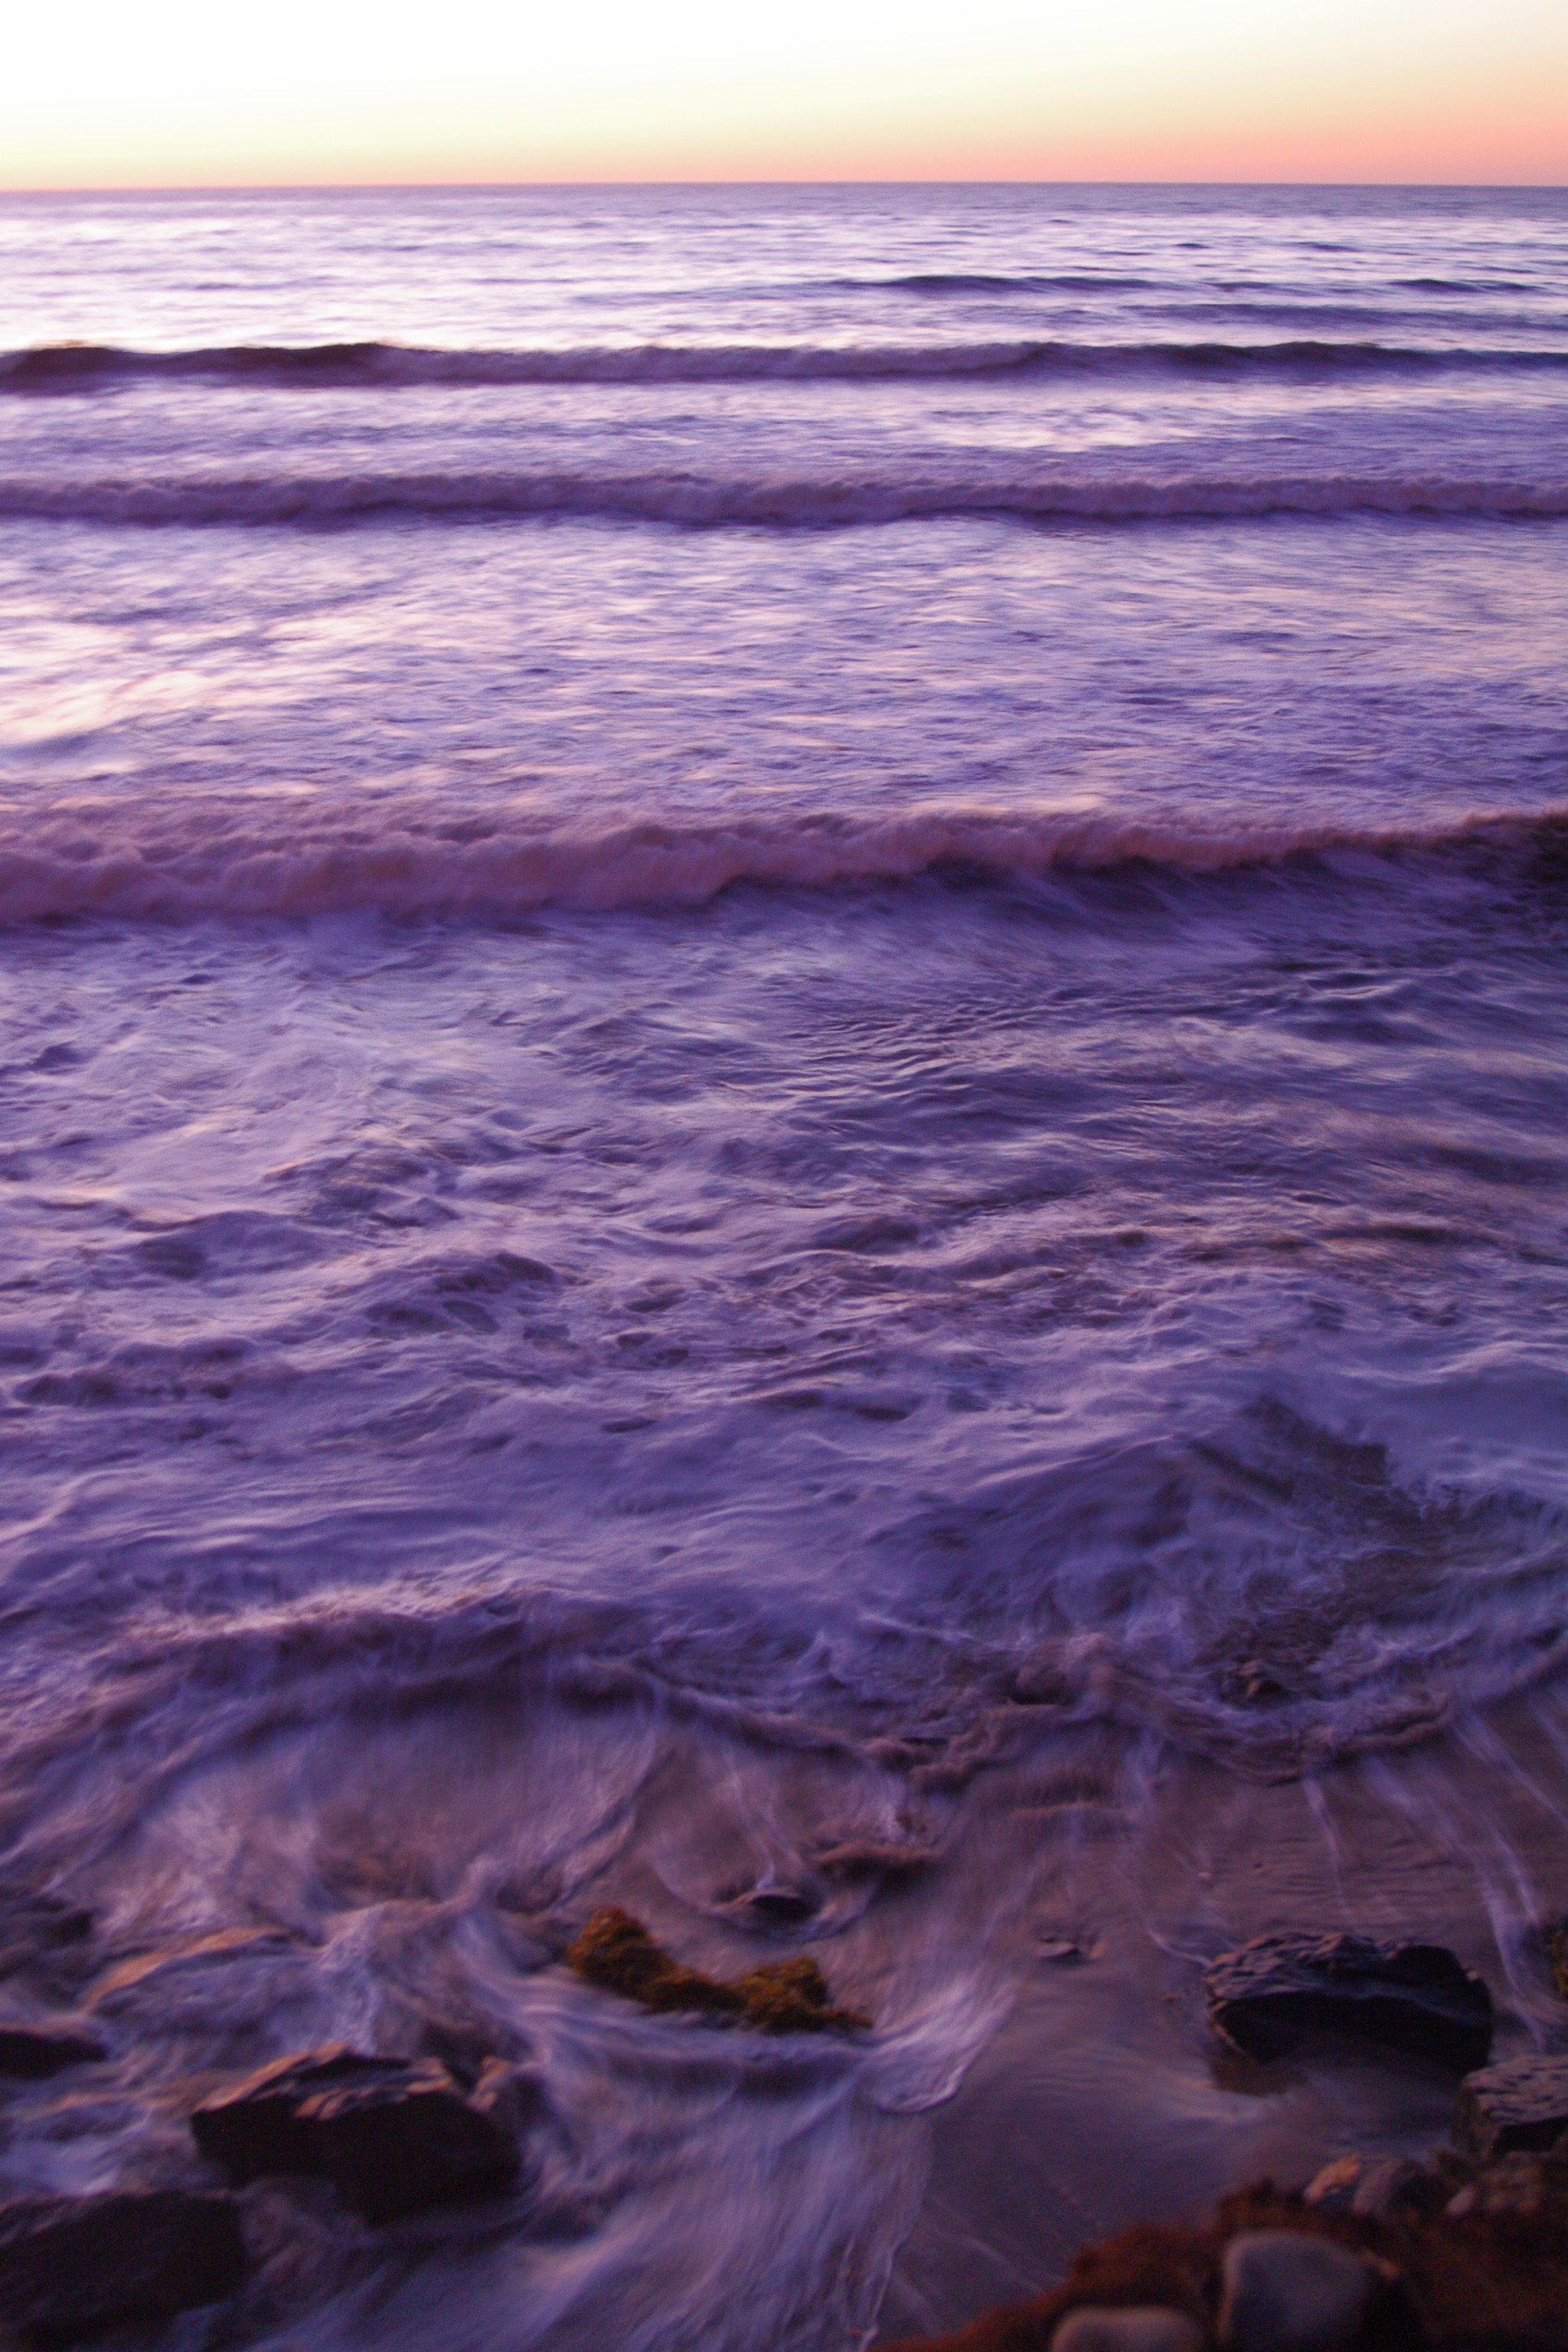 Sunset Purple Ocean Wallpapers